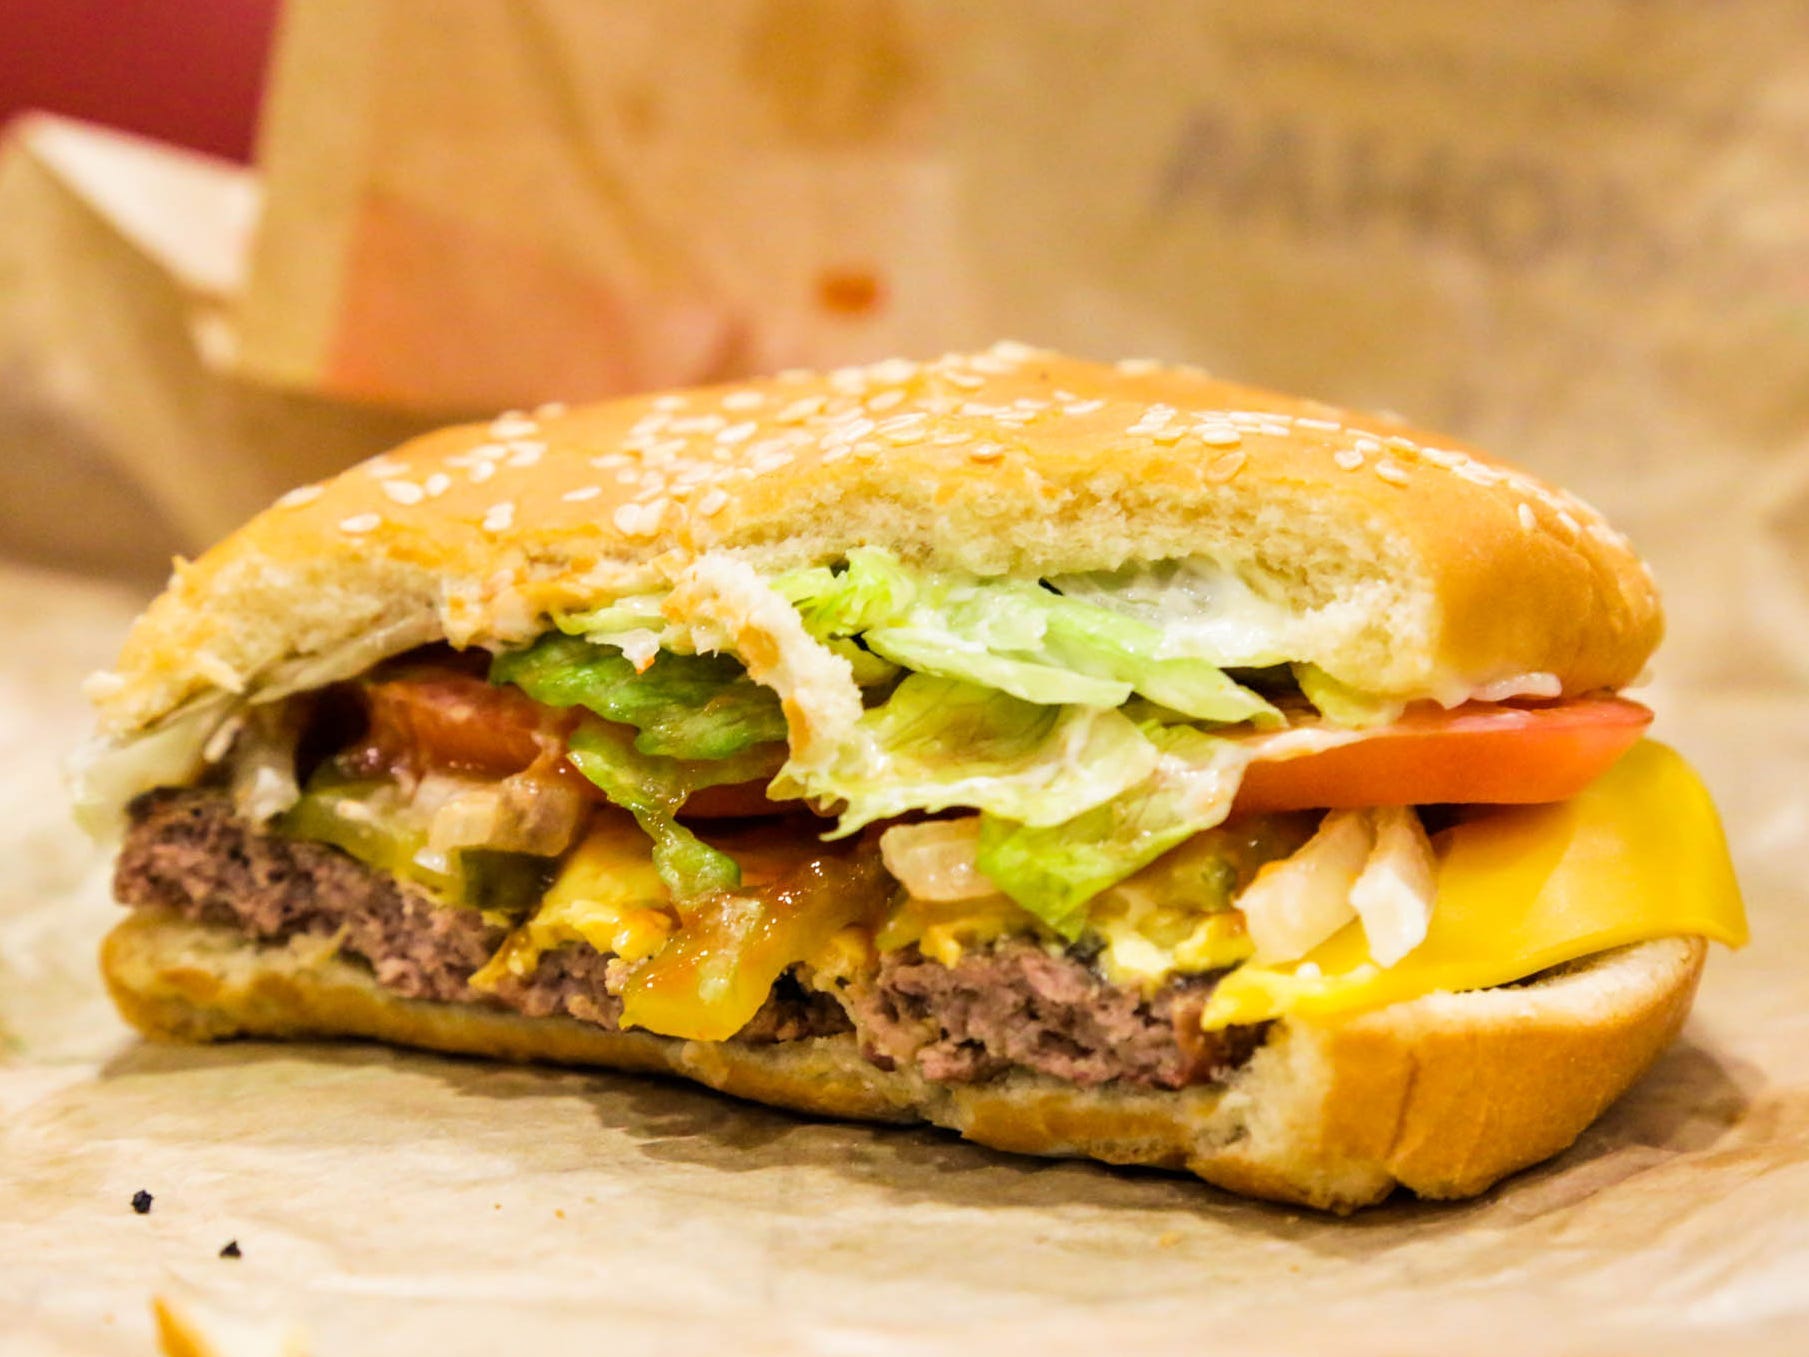 Burger King whopper meal 24